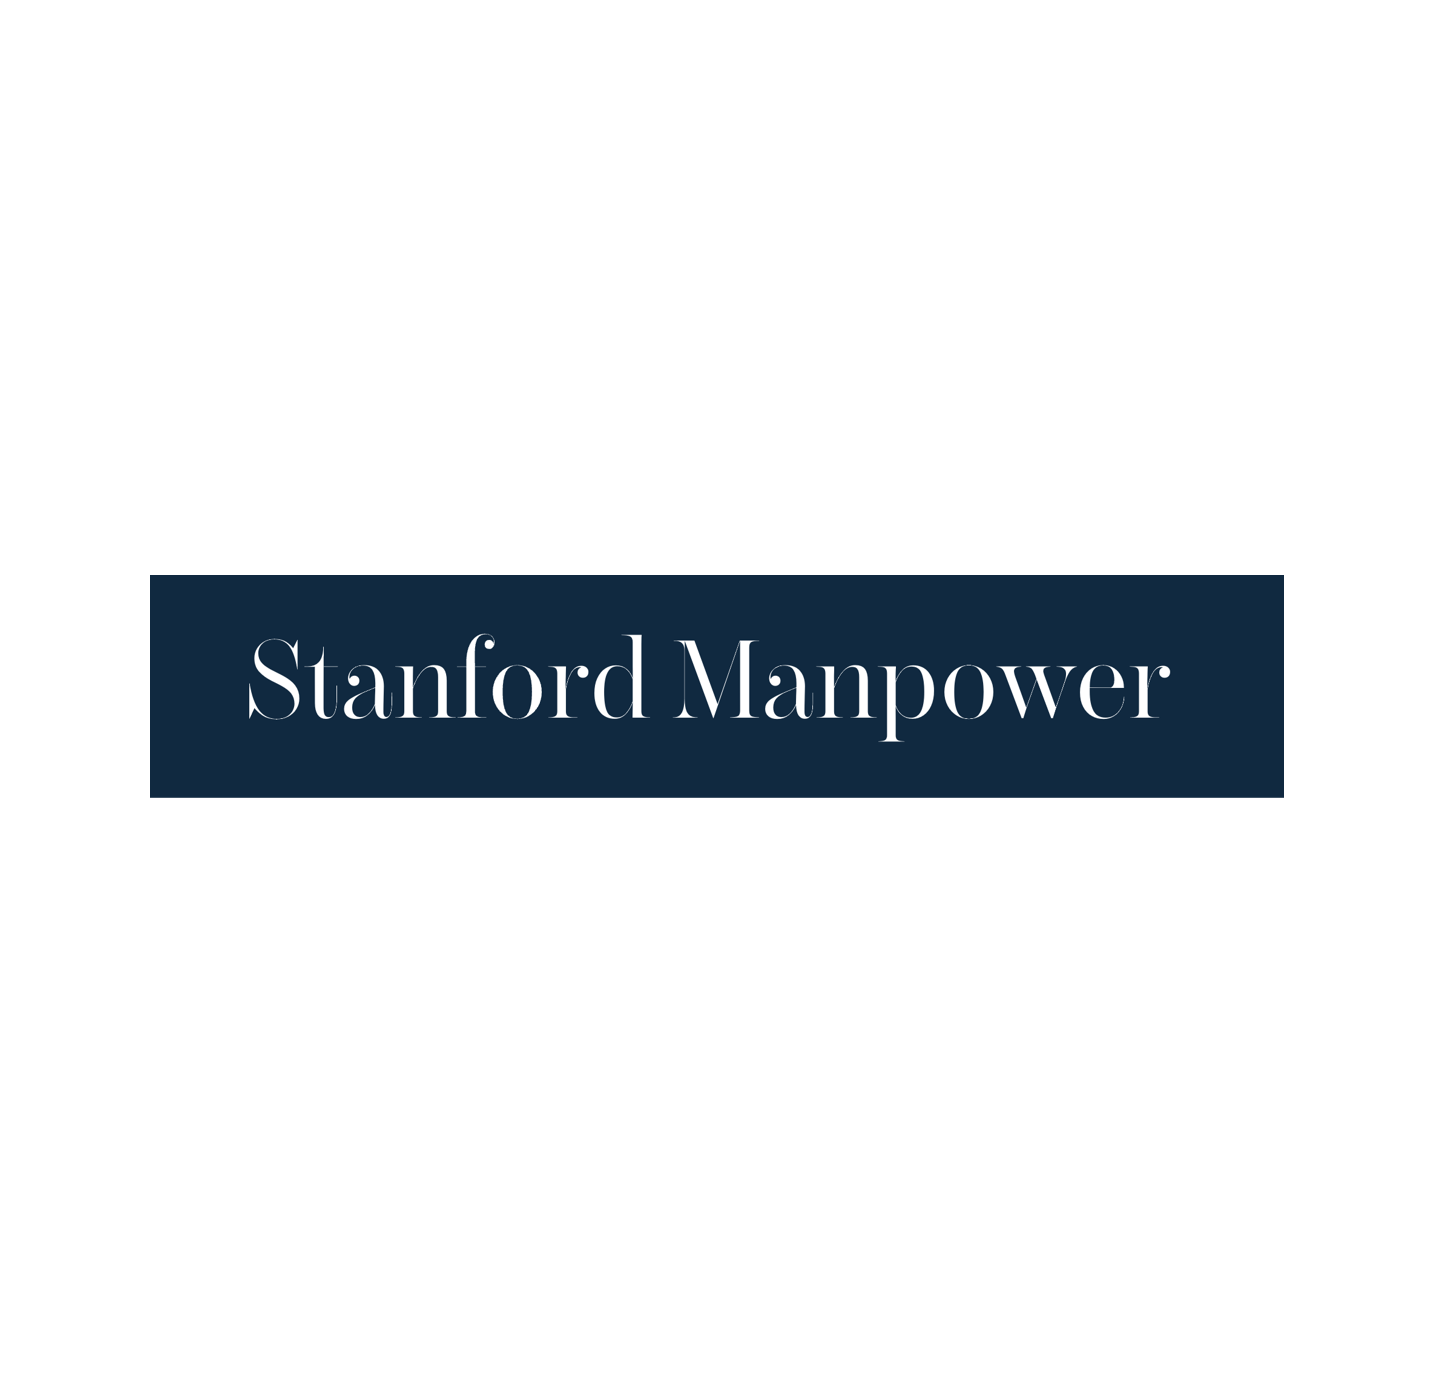 Stanford Manpower company logo